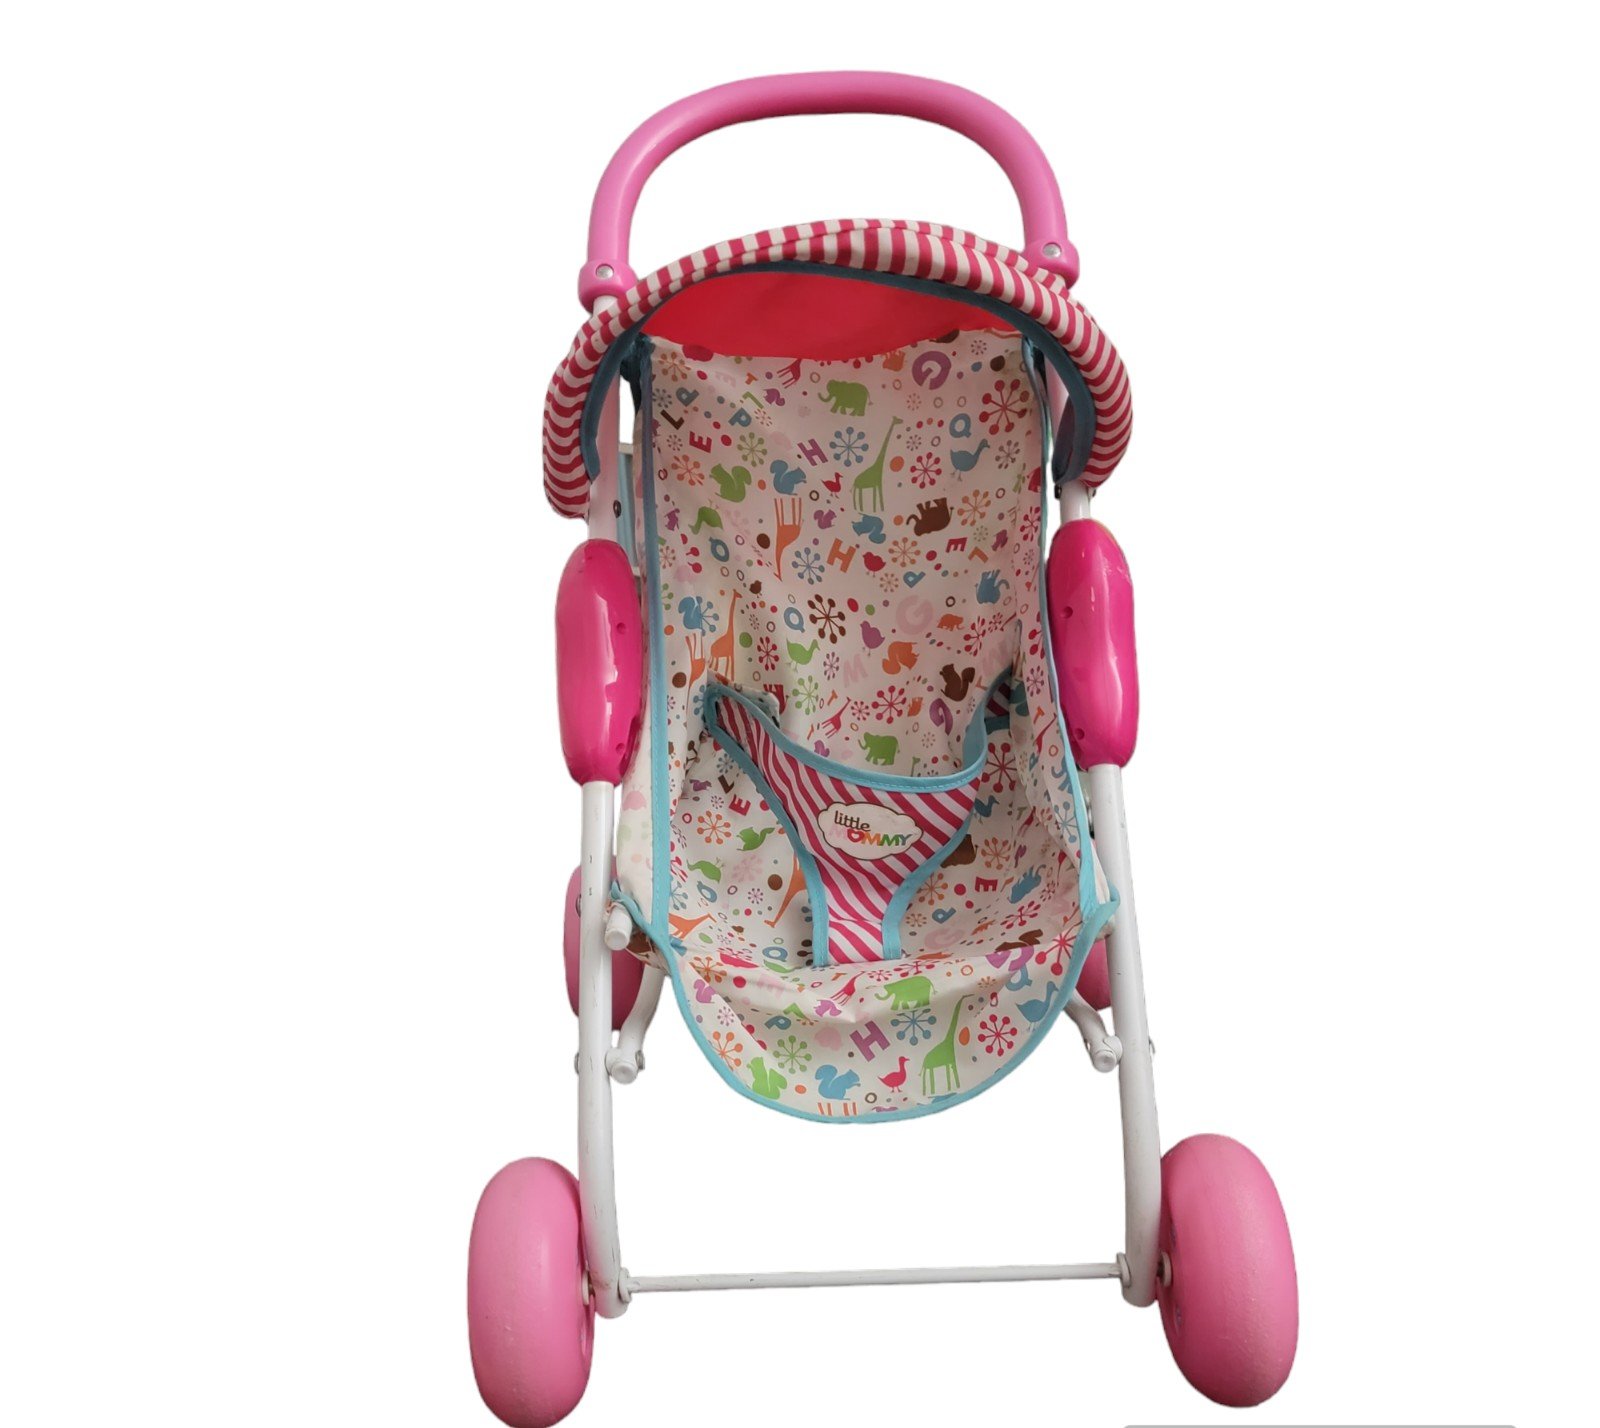 Little Me Toy Stroller for Dolls N6wy2Mqgp